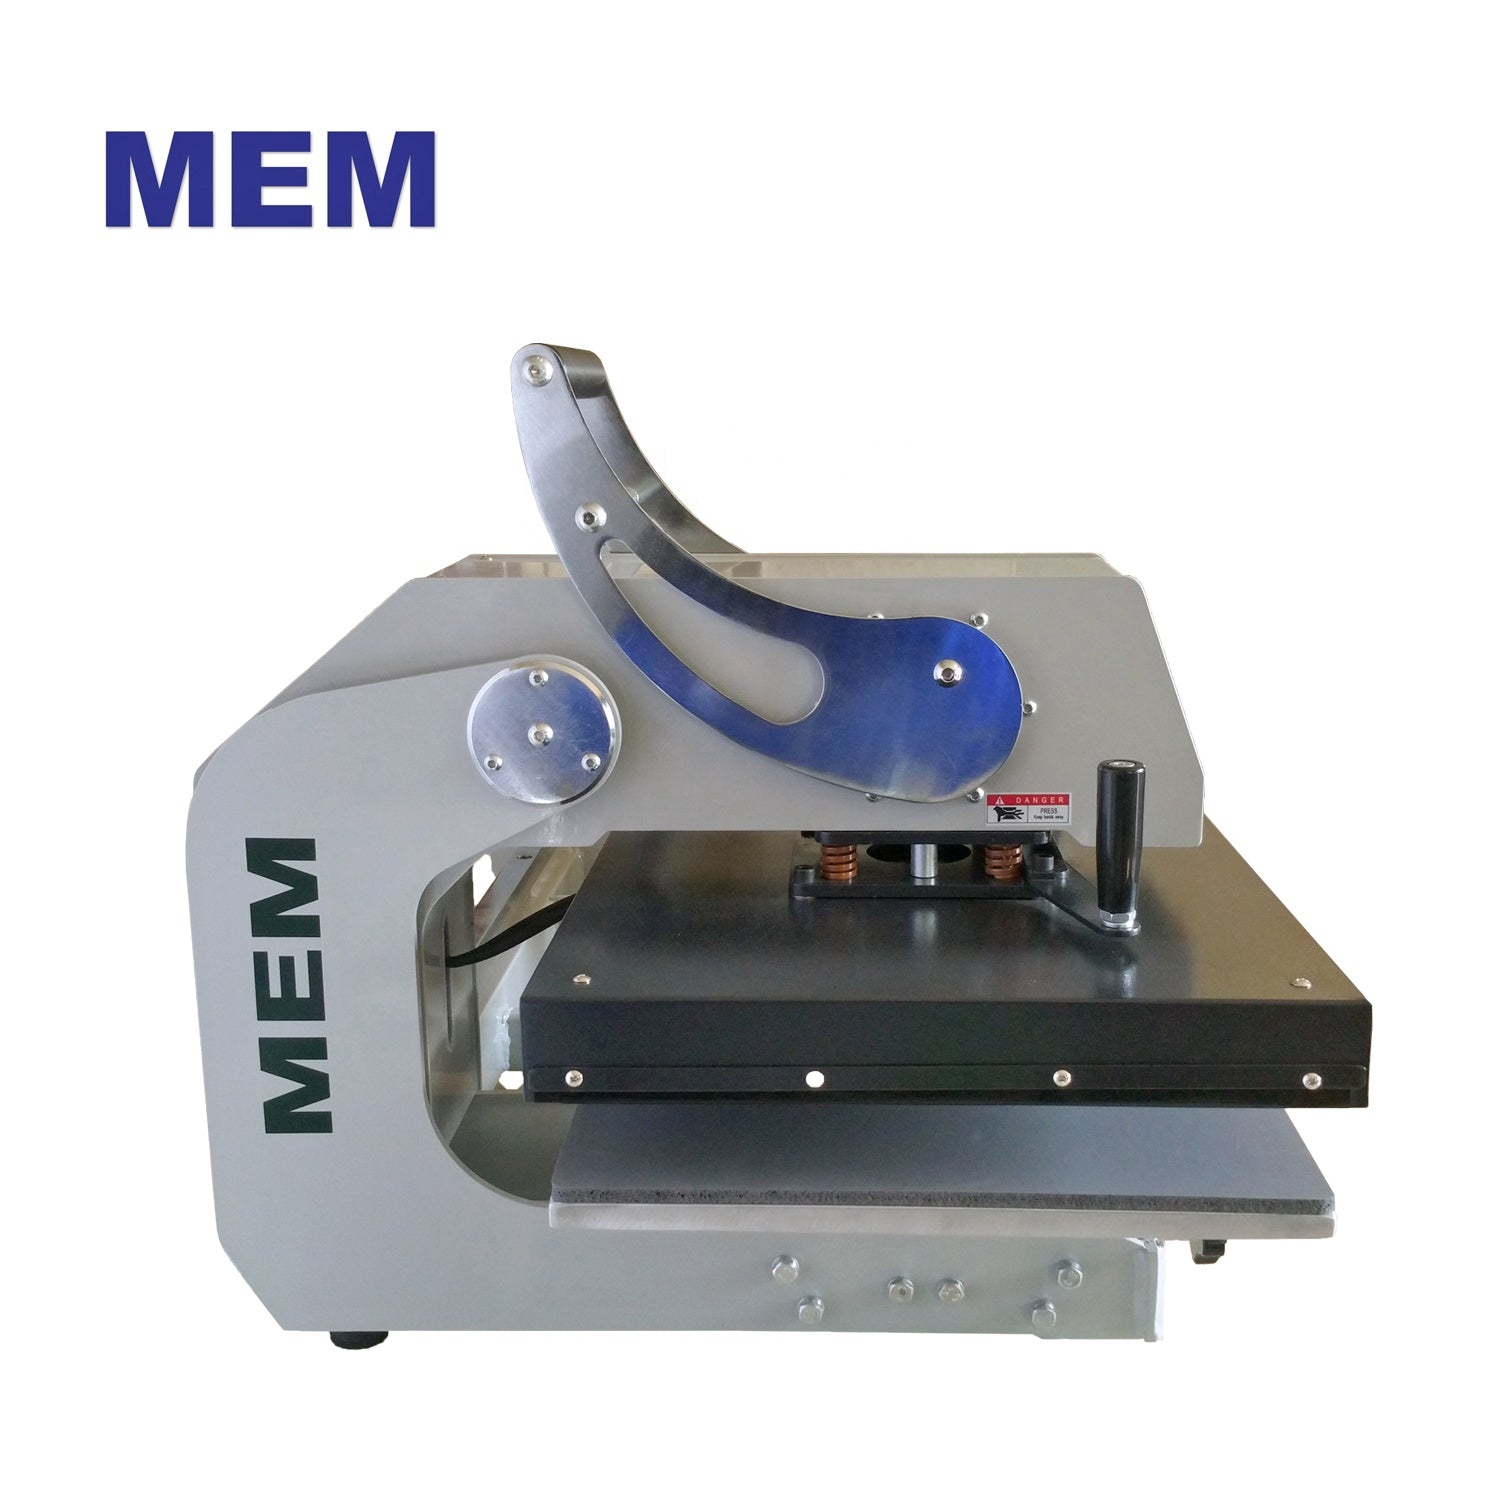 TY-4050 16 x 20 Manual Double Station Heat Press Machine -